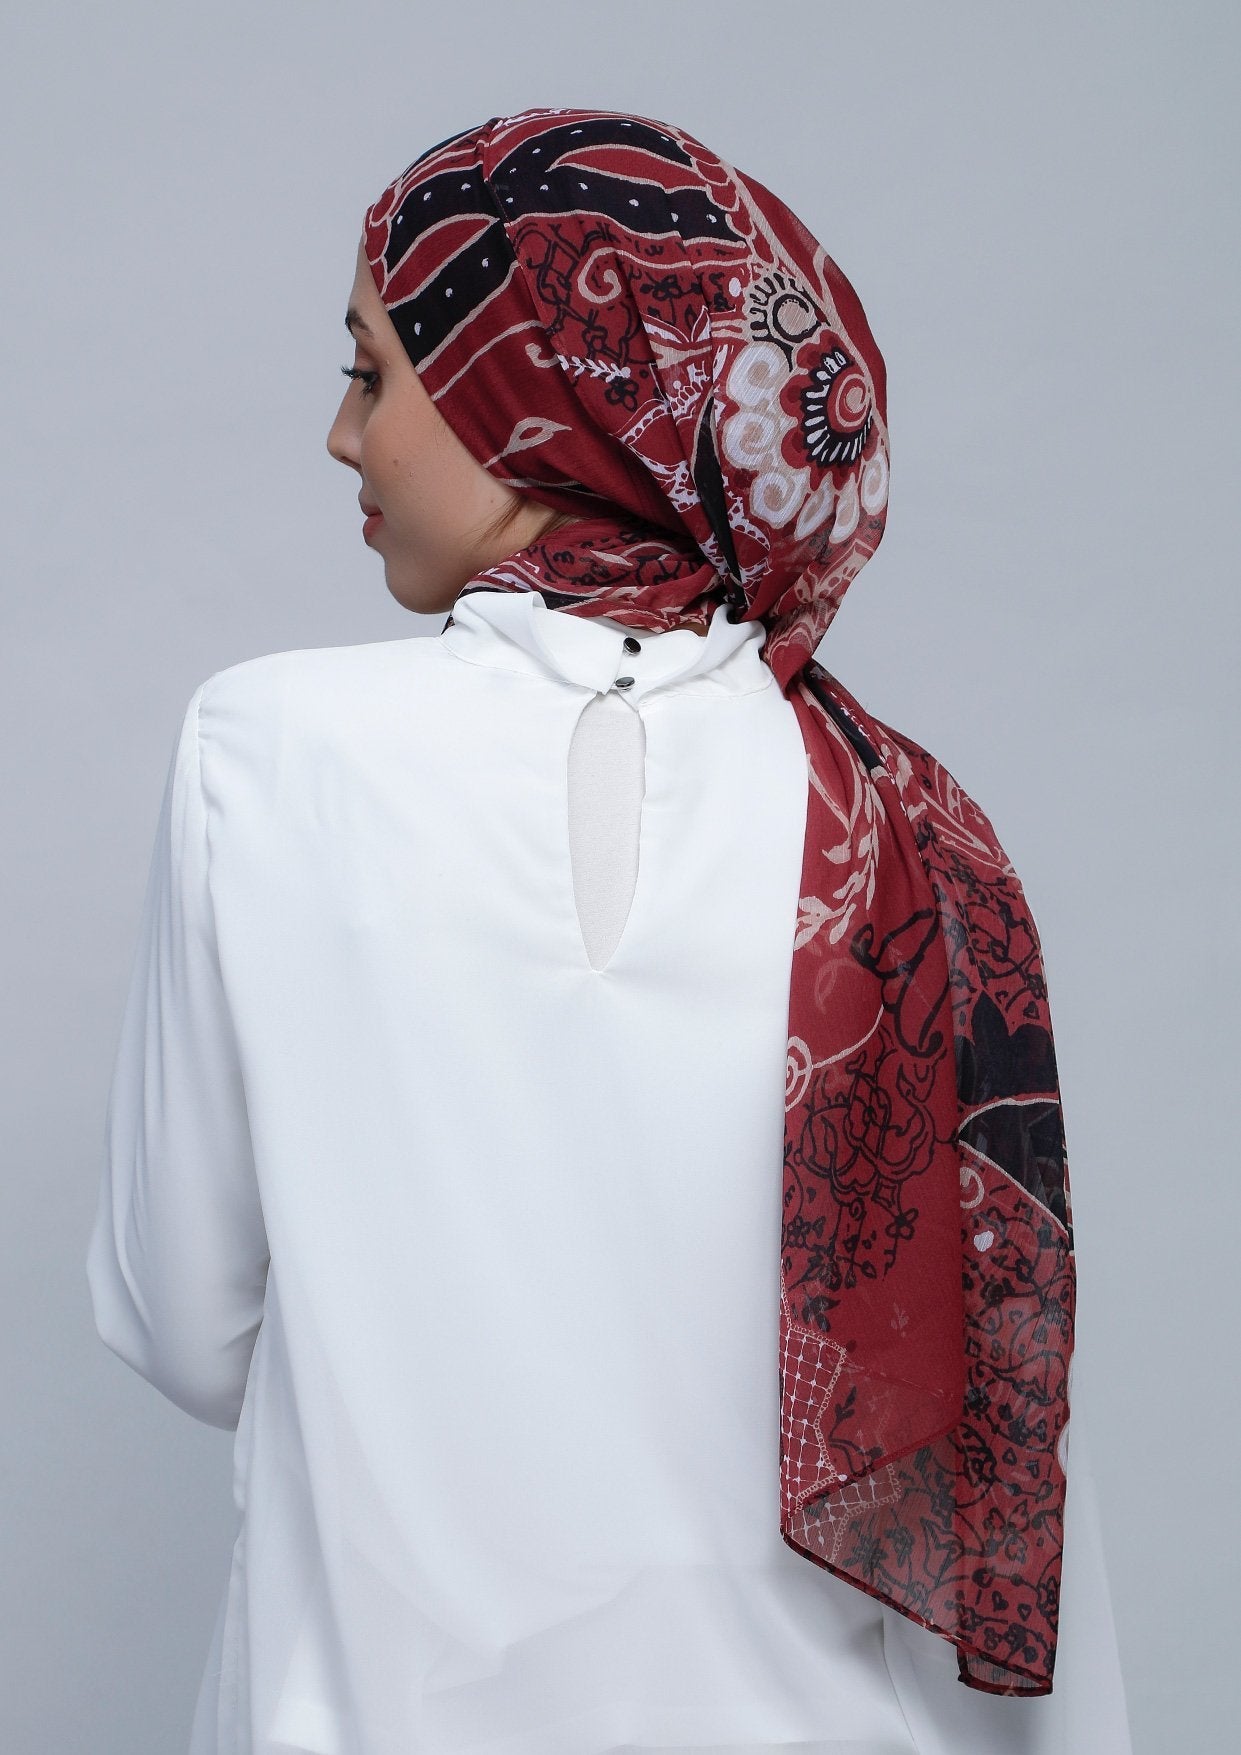 #style_cap-shawl